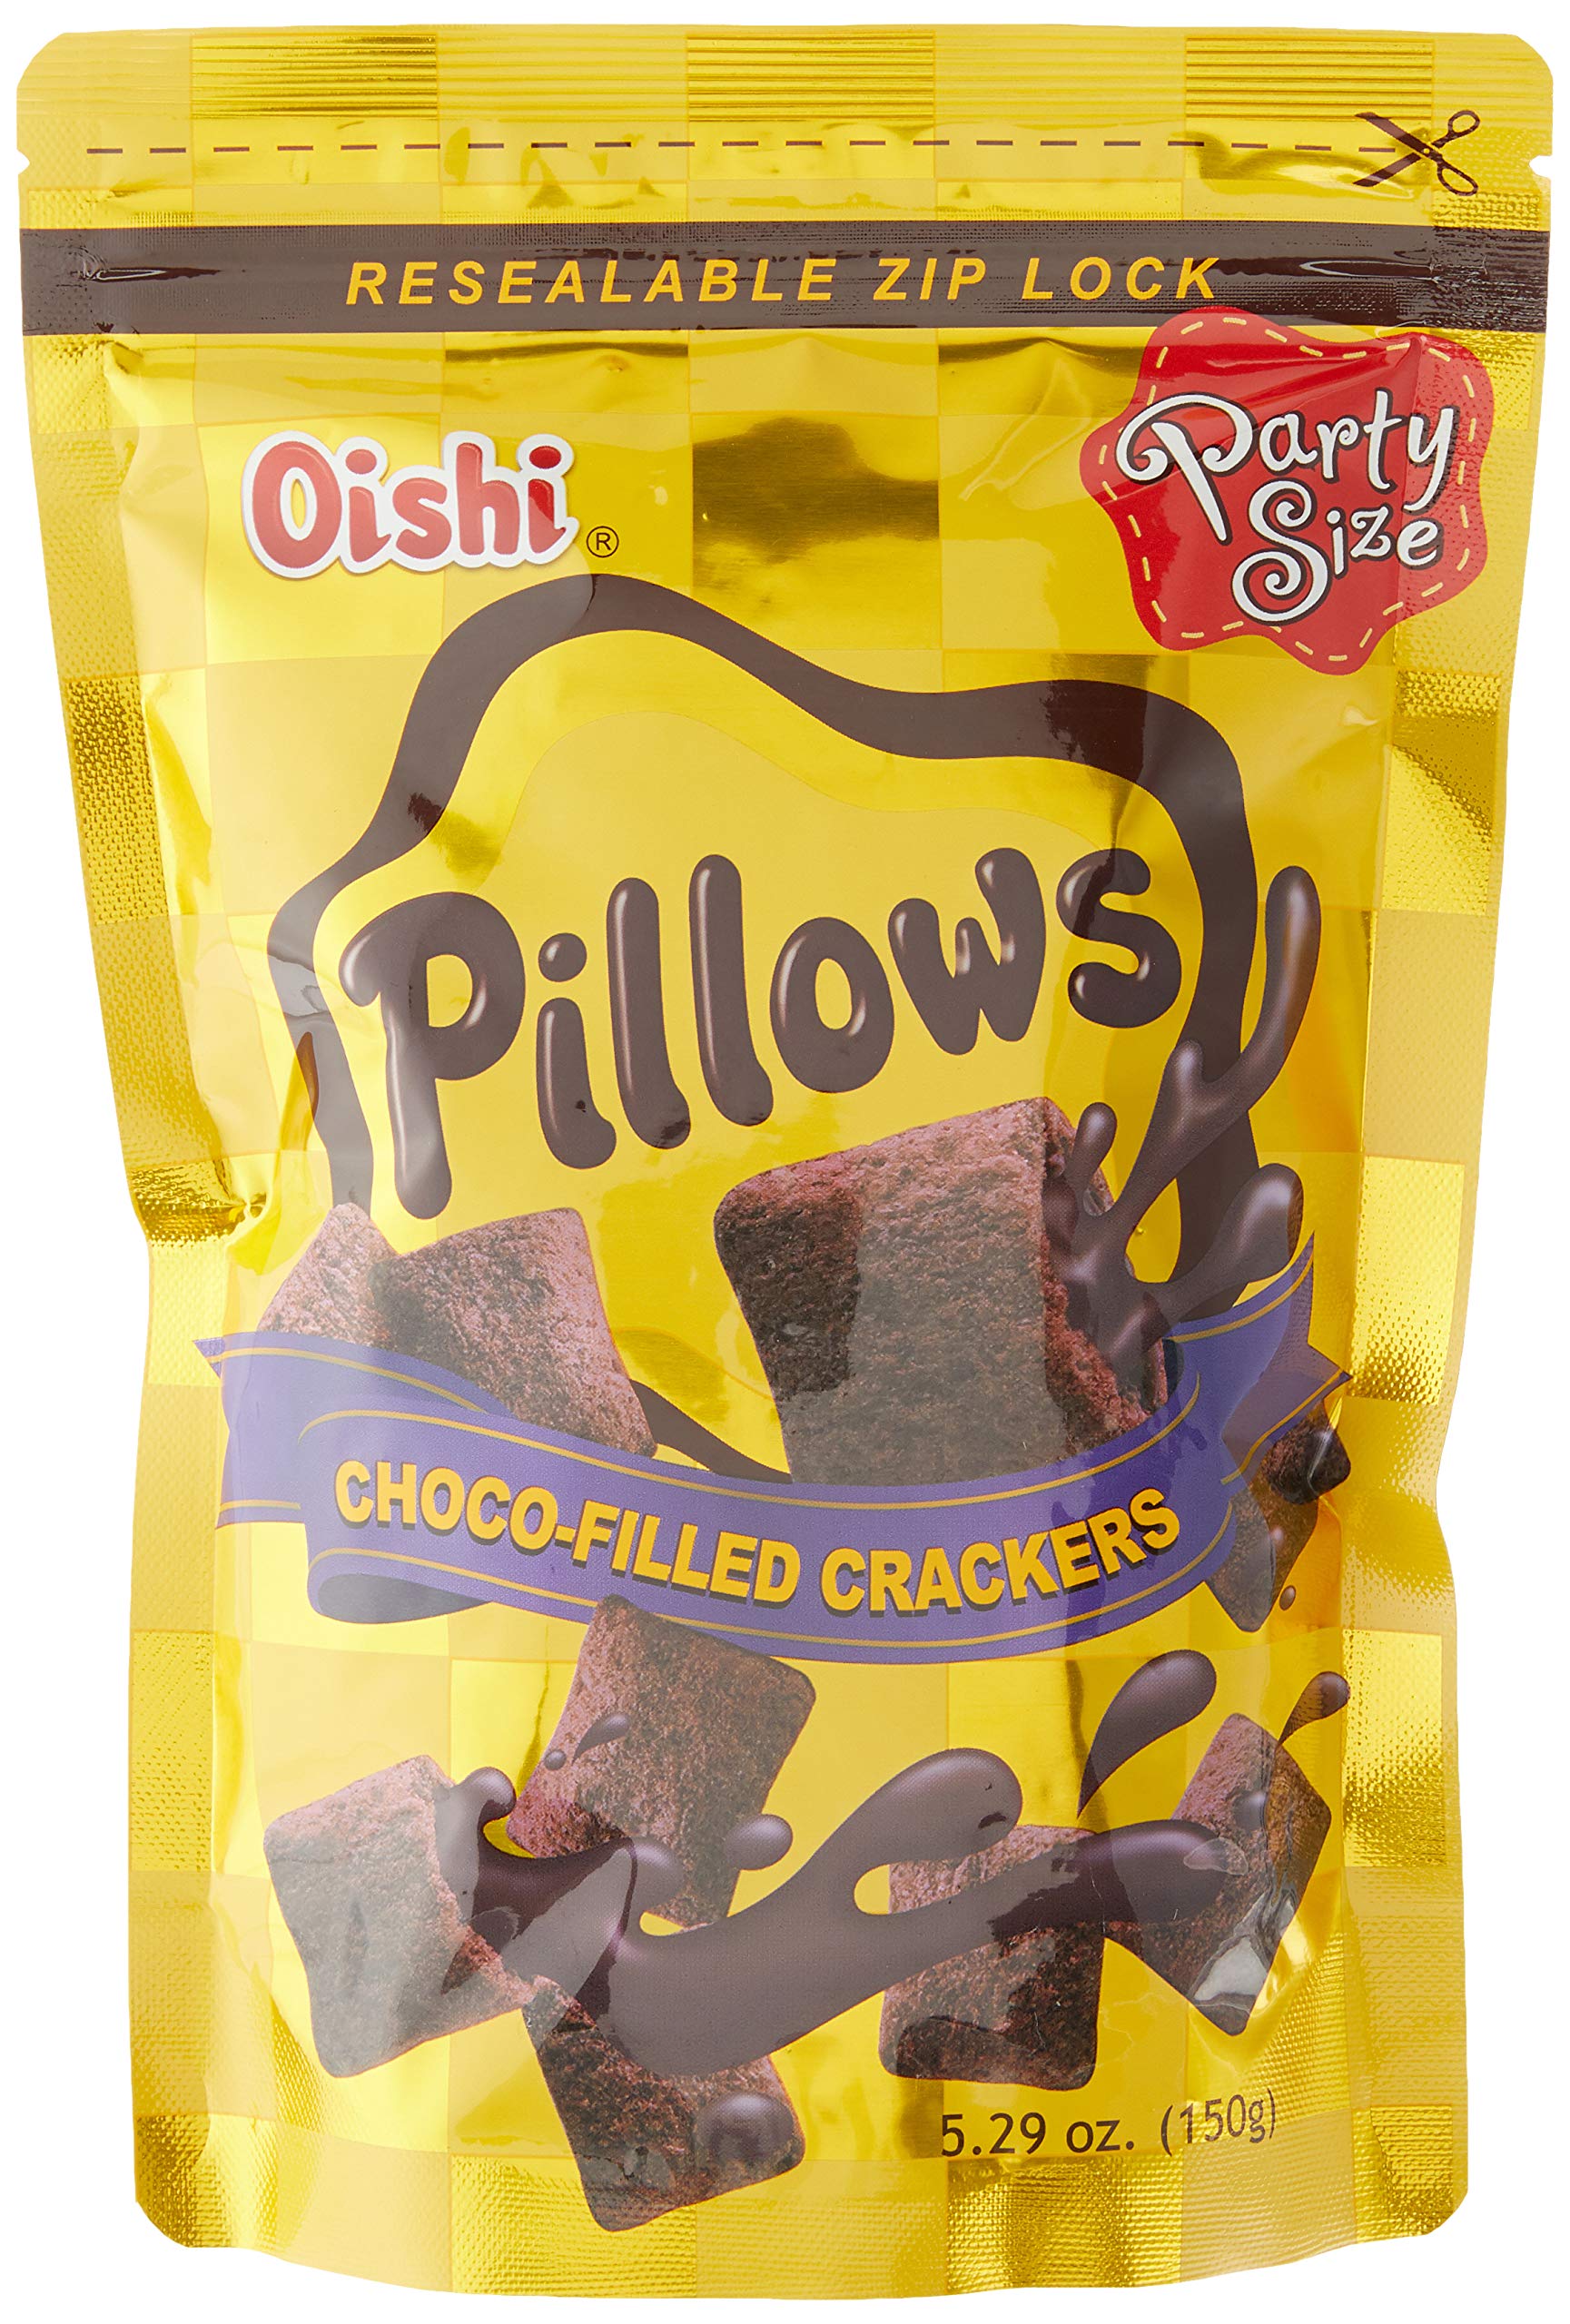 Oishi Pillows Chocolate Flavor